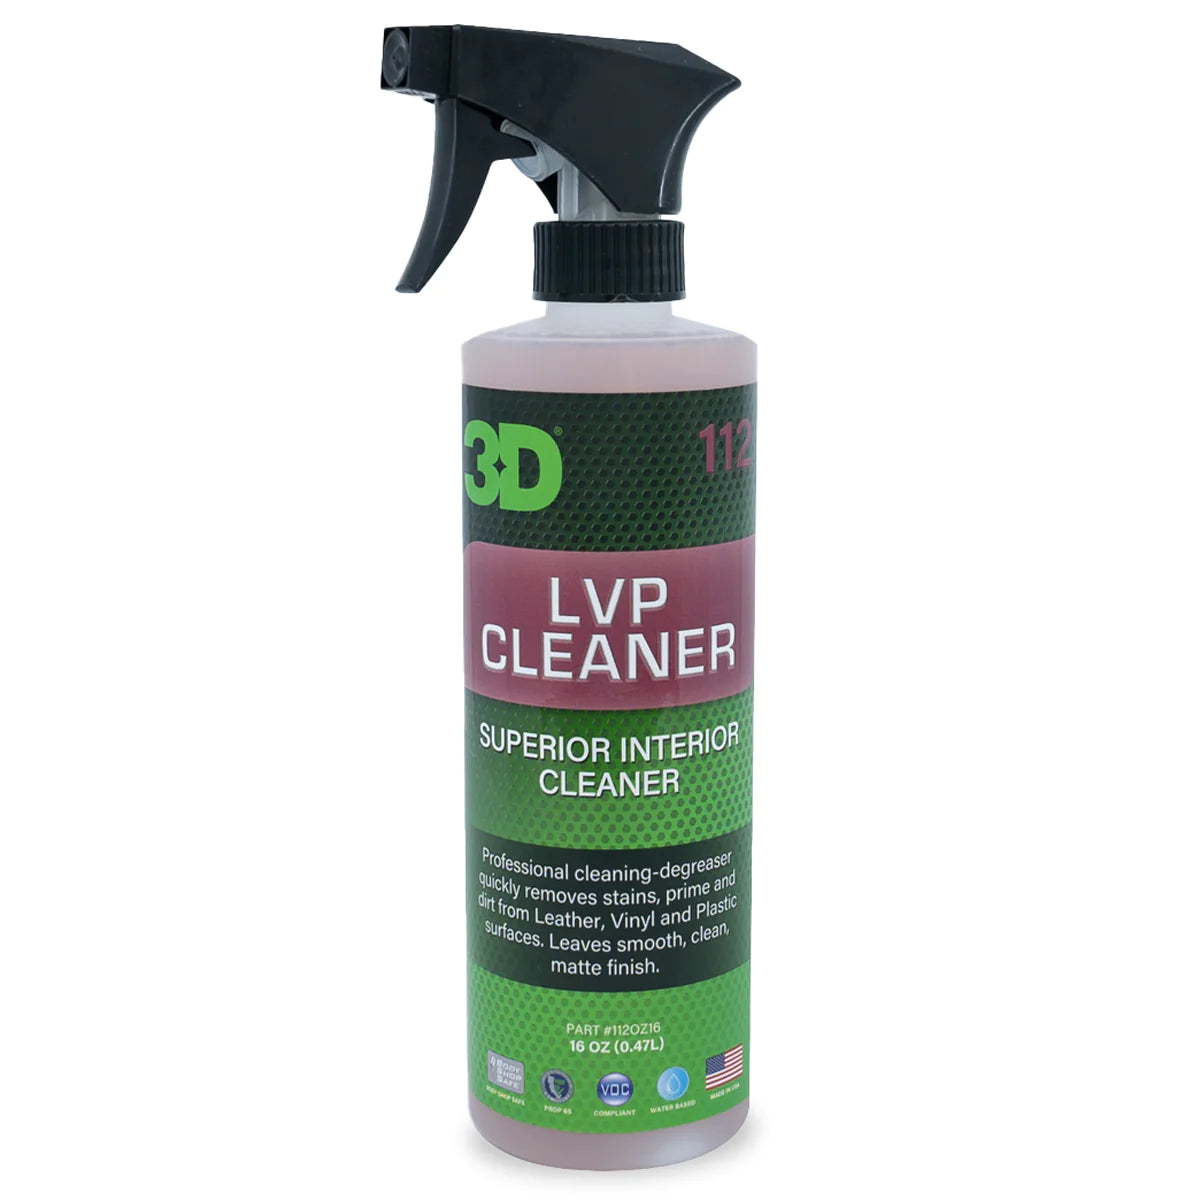 3D LVP (Leather, Vinyl & Plastic) Cleaner 16oz (473ml)